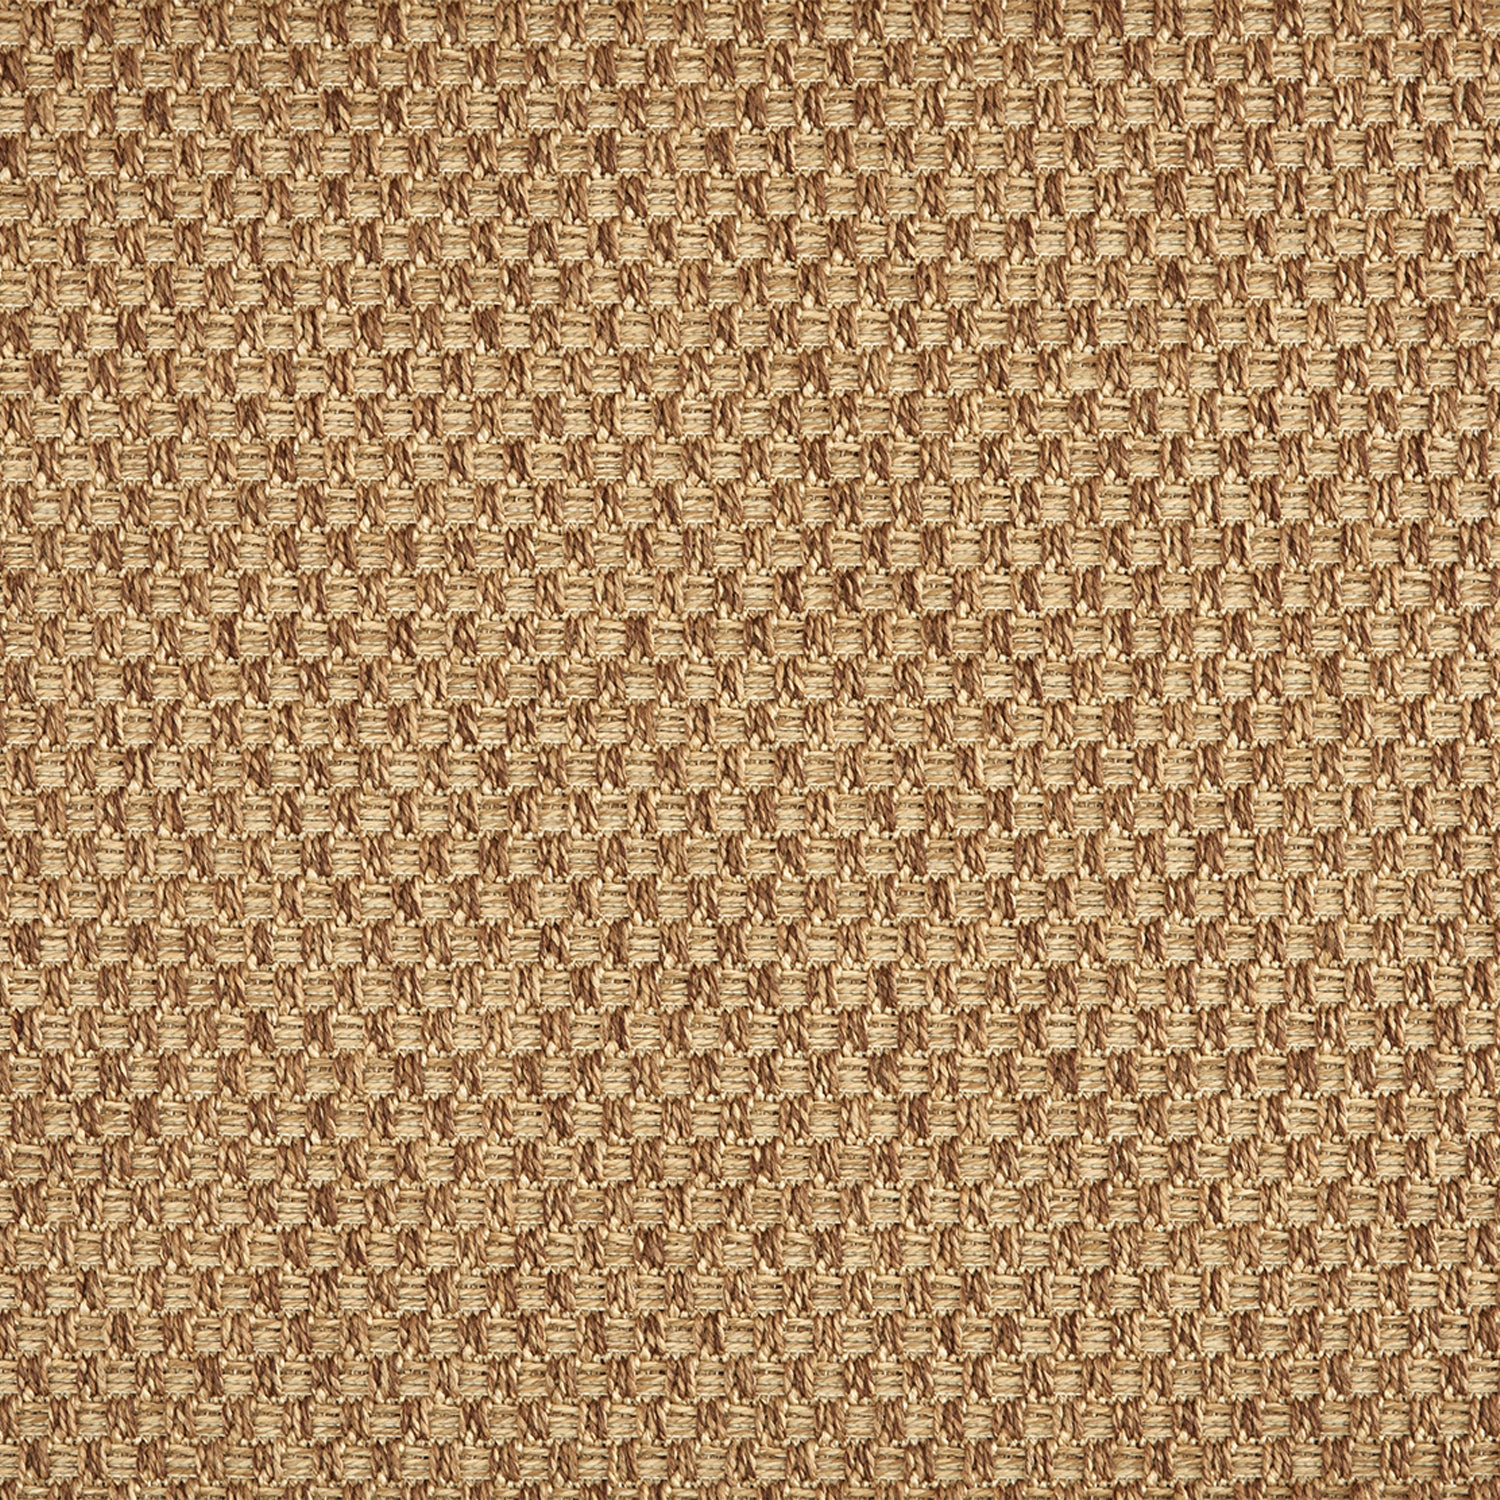 Outdoor broadloom carpet swatch in a flat grid weave in burnt umber.